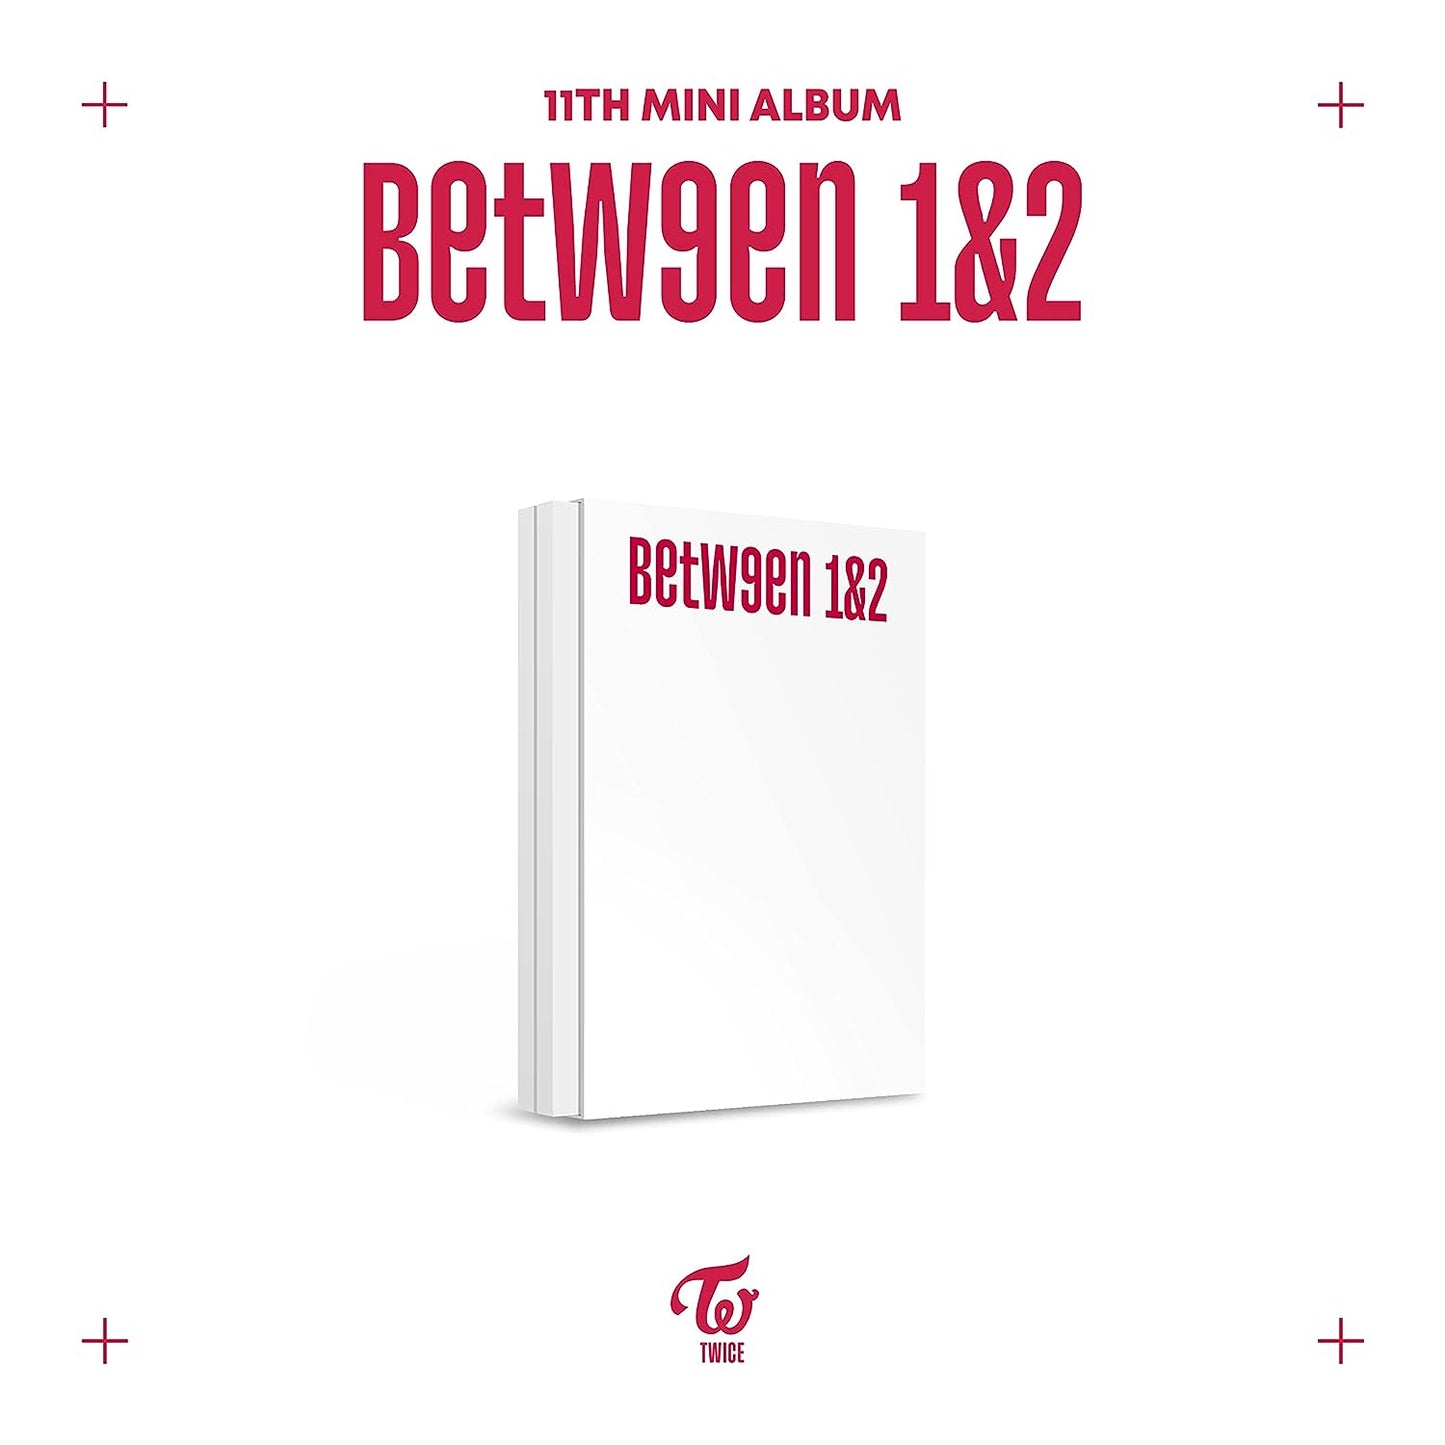 TWICE 11TH MINI ALBUM 'BETWEEN 1&2' COMPLETE VERSION COVER